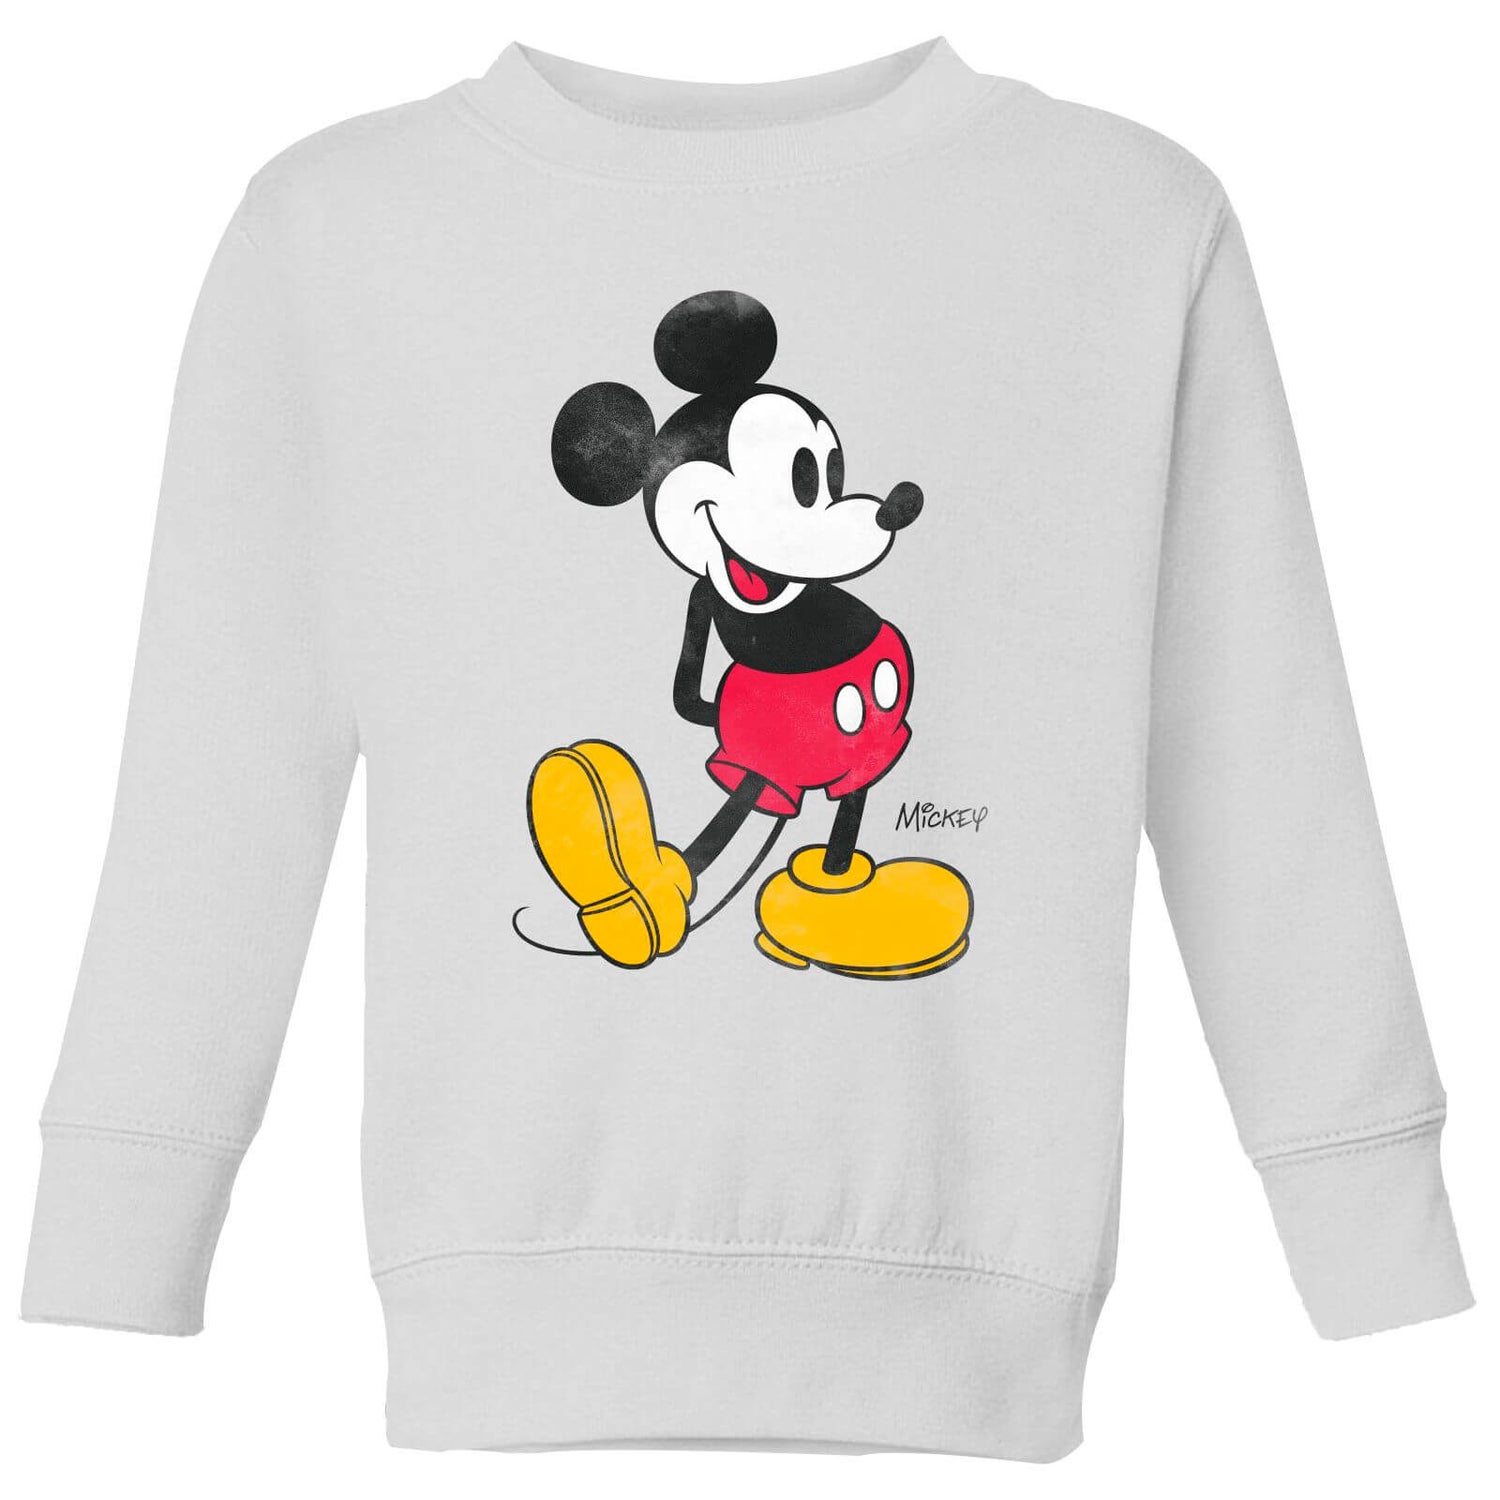 Disney Mickey Mouse Classic Kick Kids' Sweatshirt - White